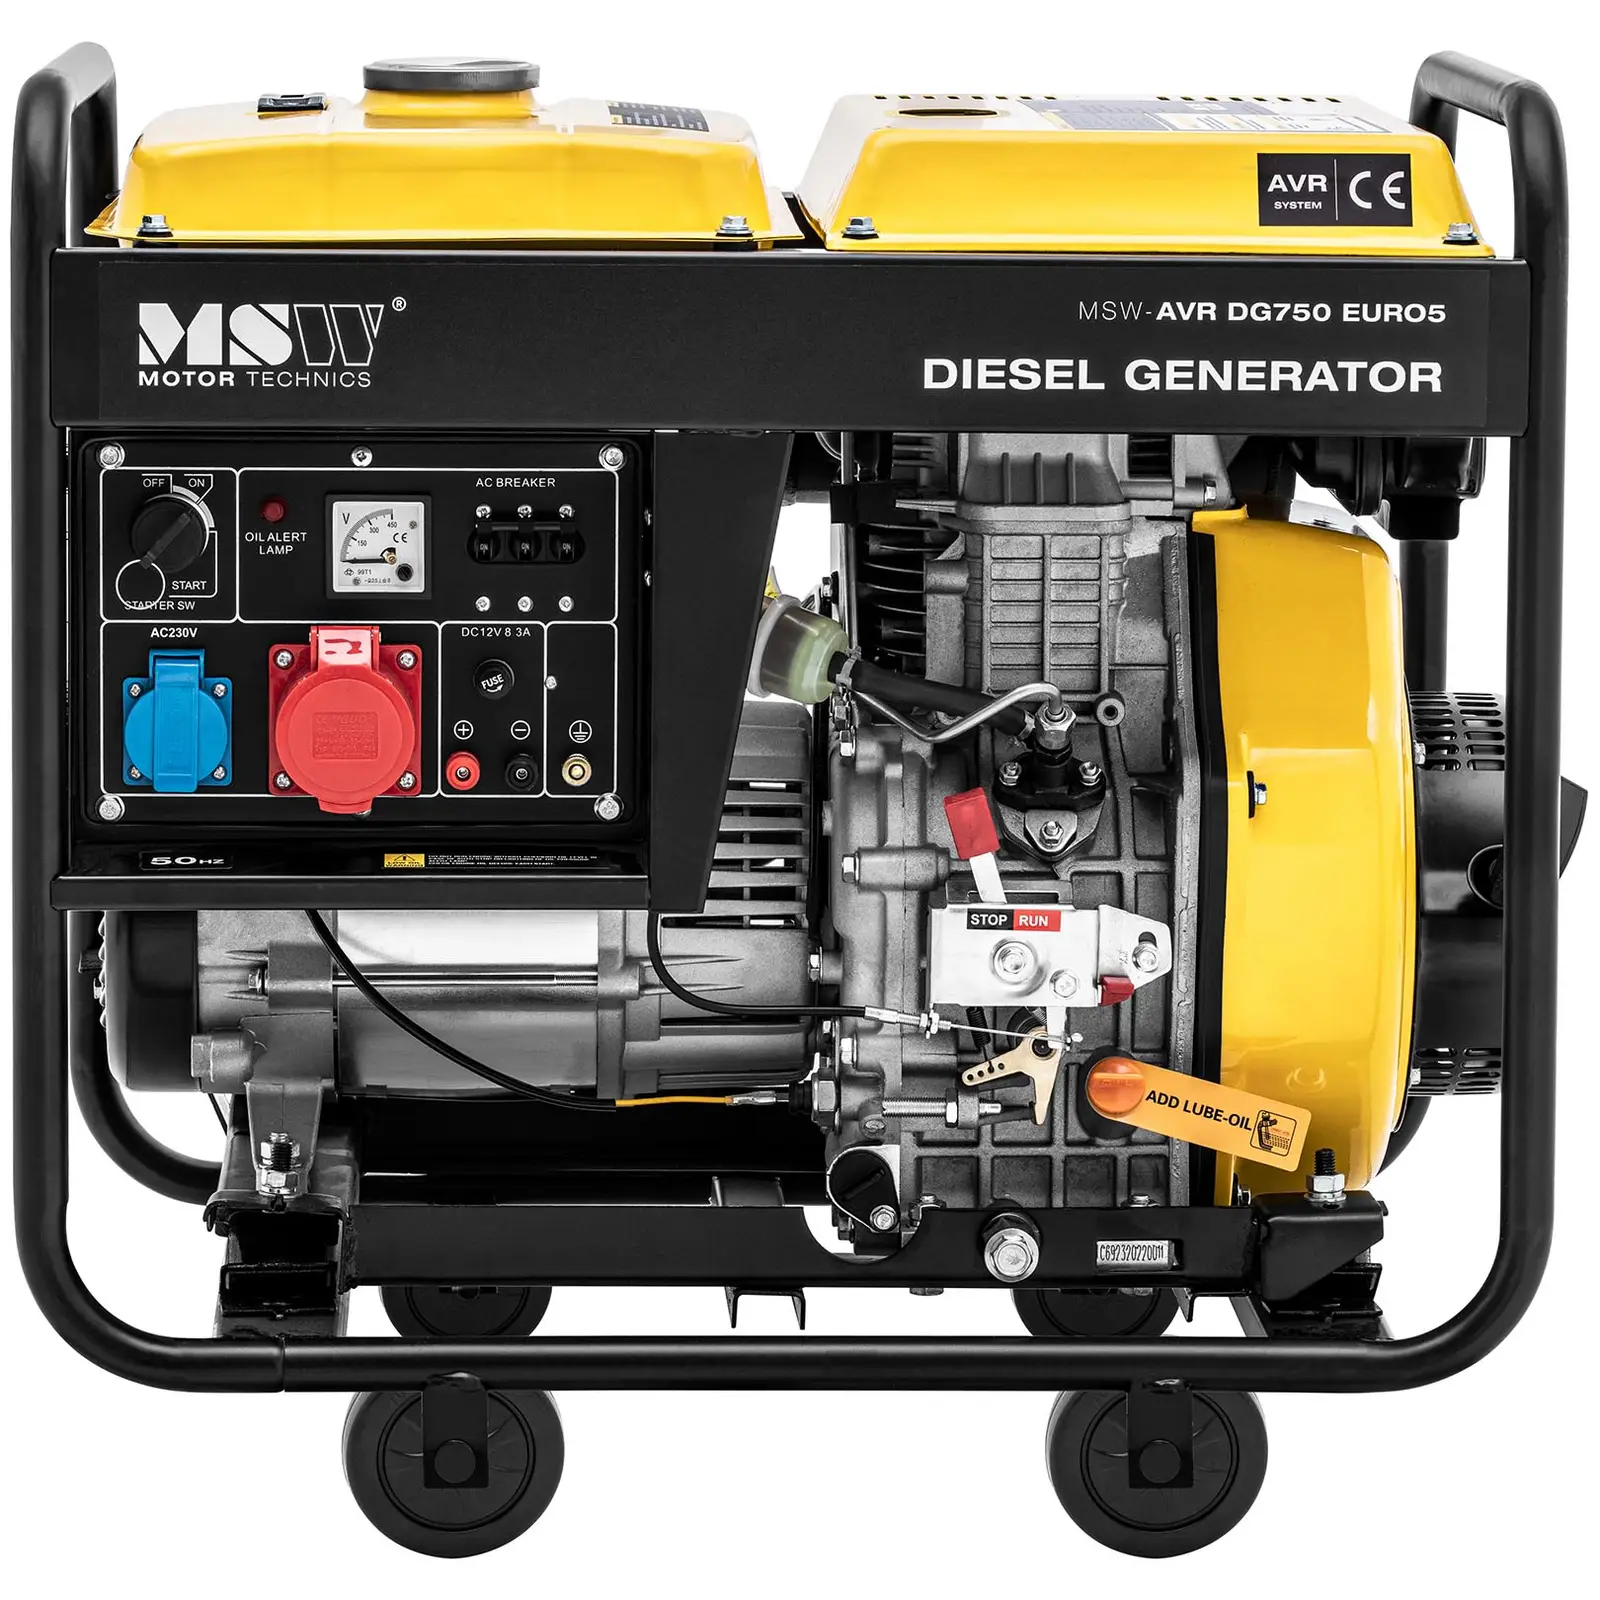 Dieselgenerator - 1650 / 4600 W - 12,5 L - 230/400 V - Portabel - AVR - Euro 5